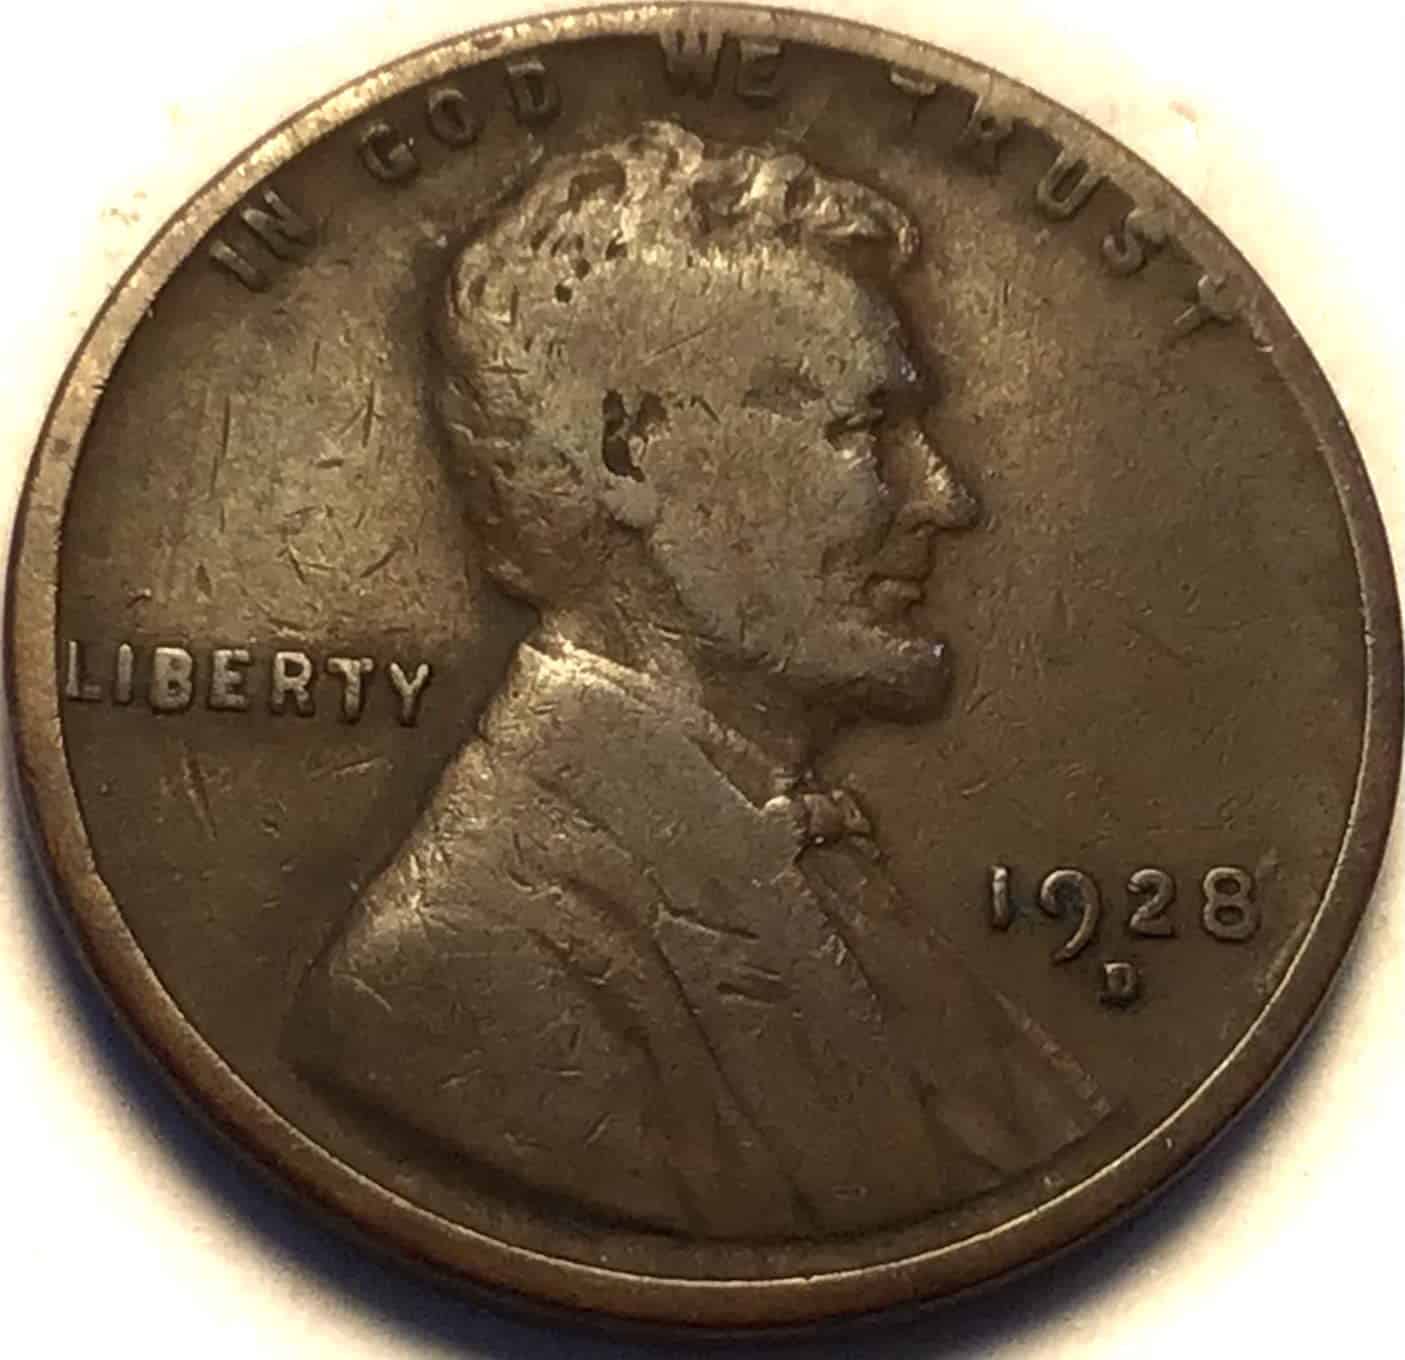 1928 Wheat Penny Value